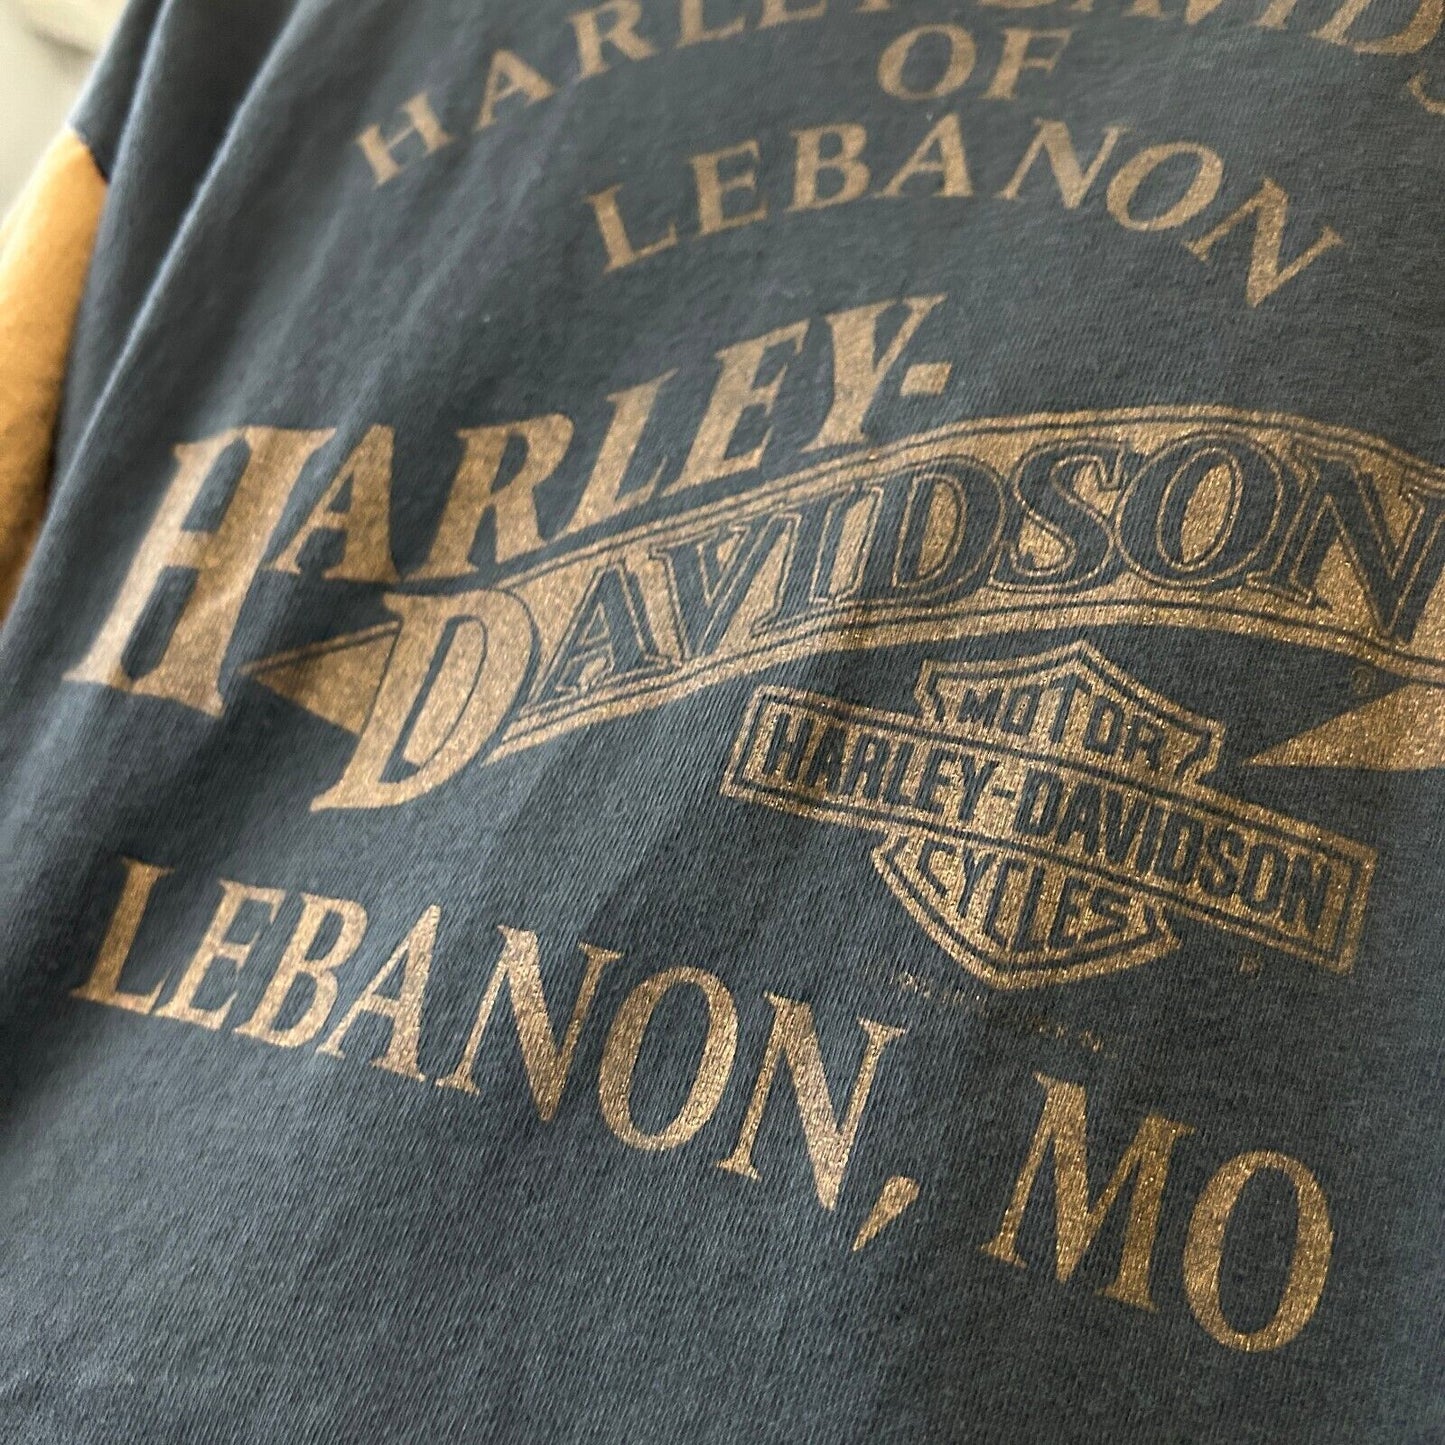 VINTAGE 90s | HARLEY DAVIDSON Two Tone Lebanon Biker T-Shirt sz M Adult